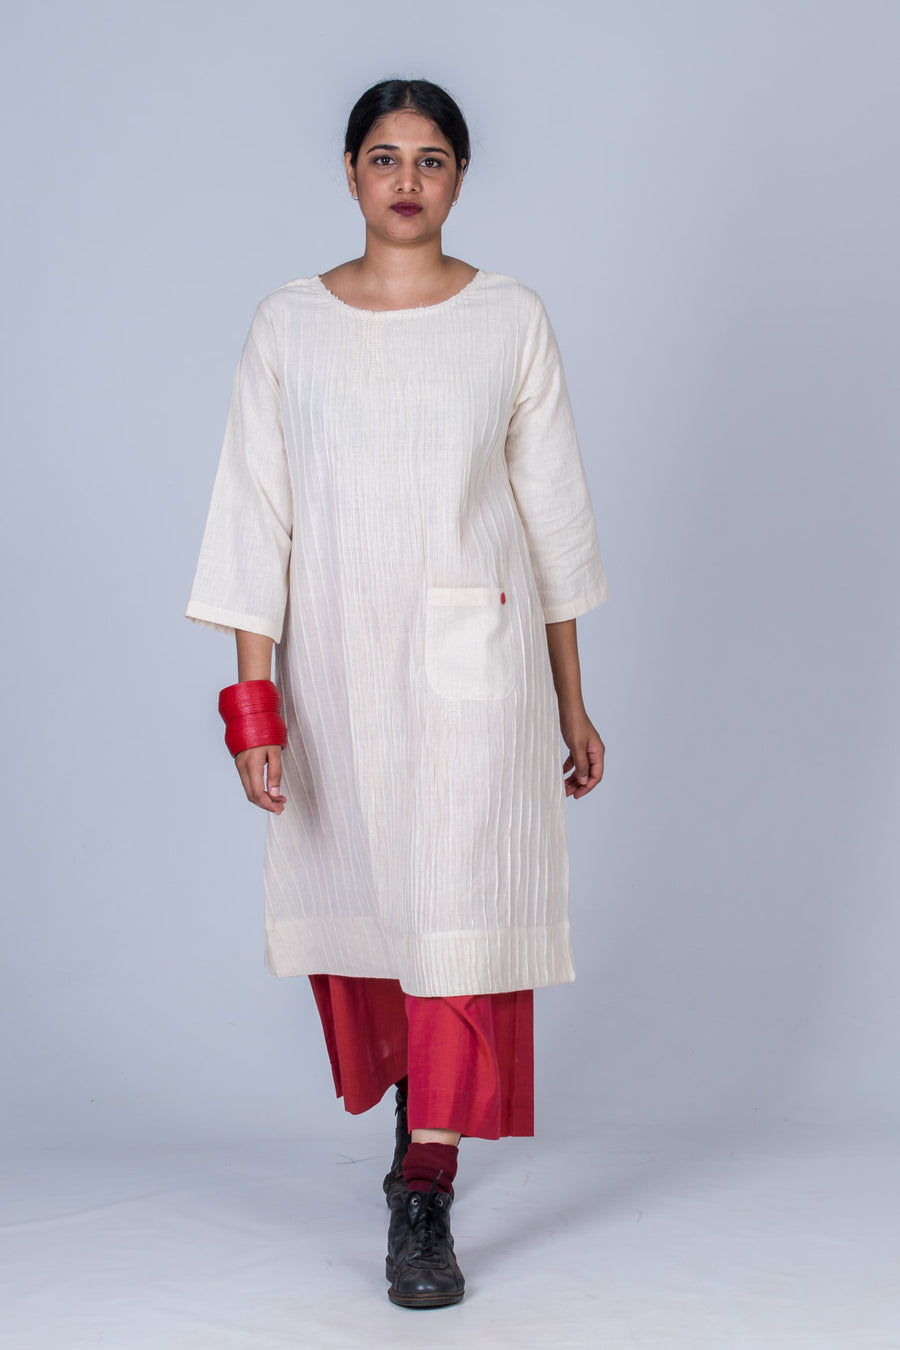 Off  White Desi Cotton Pintuck Dress - PARINA - Upasana Design Studio